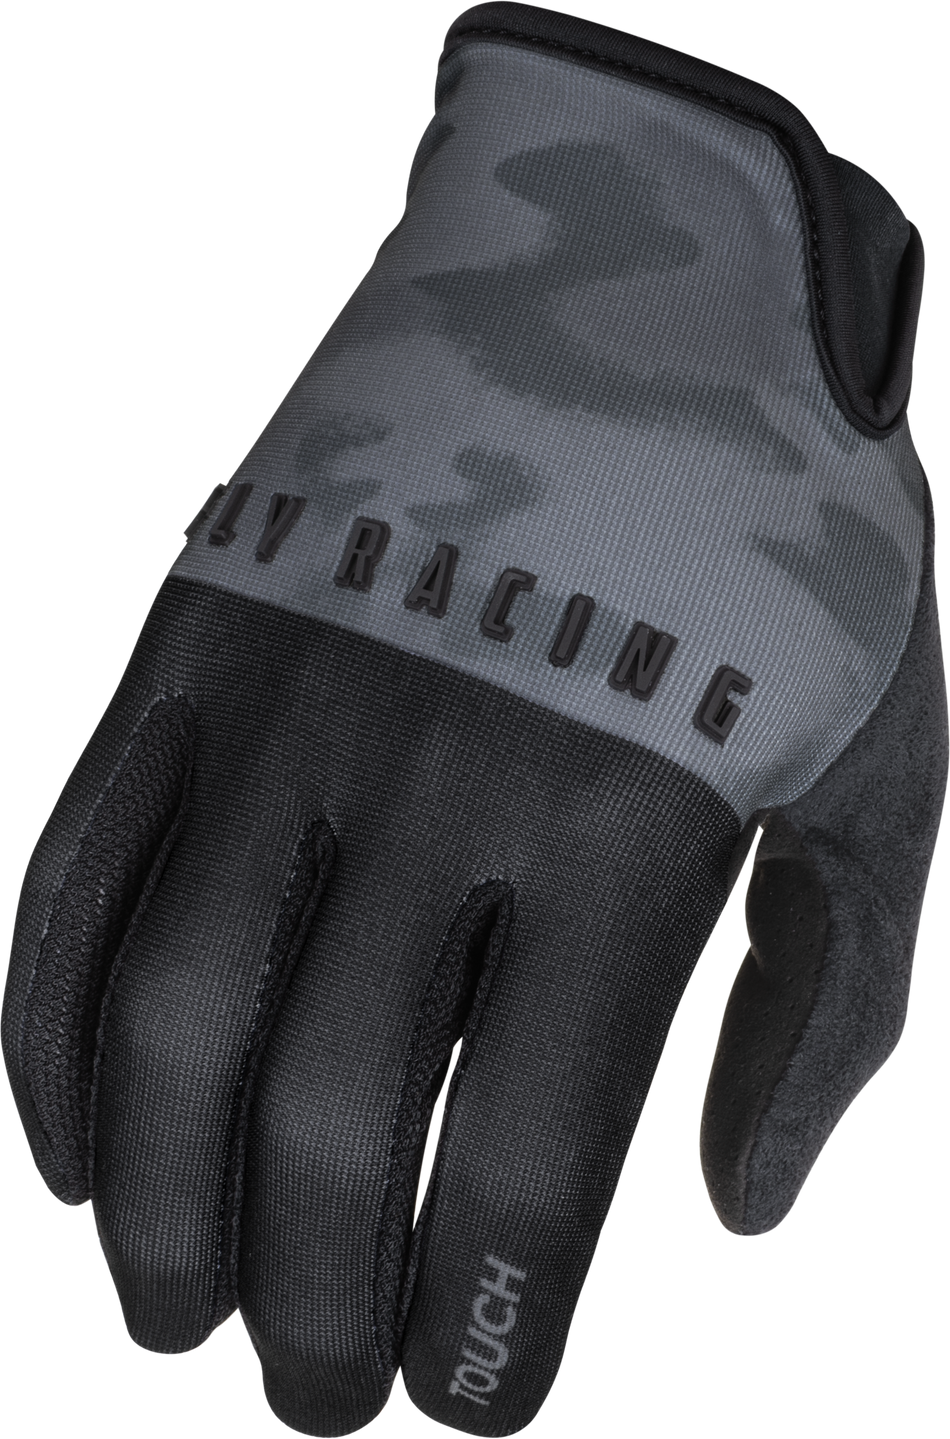 FLY RACING Media Gloves Black/Grey Camo Md 350-0121M